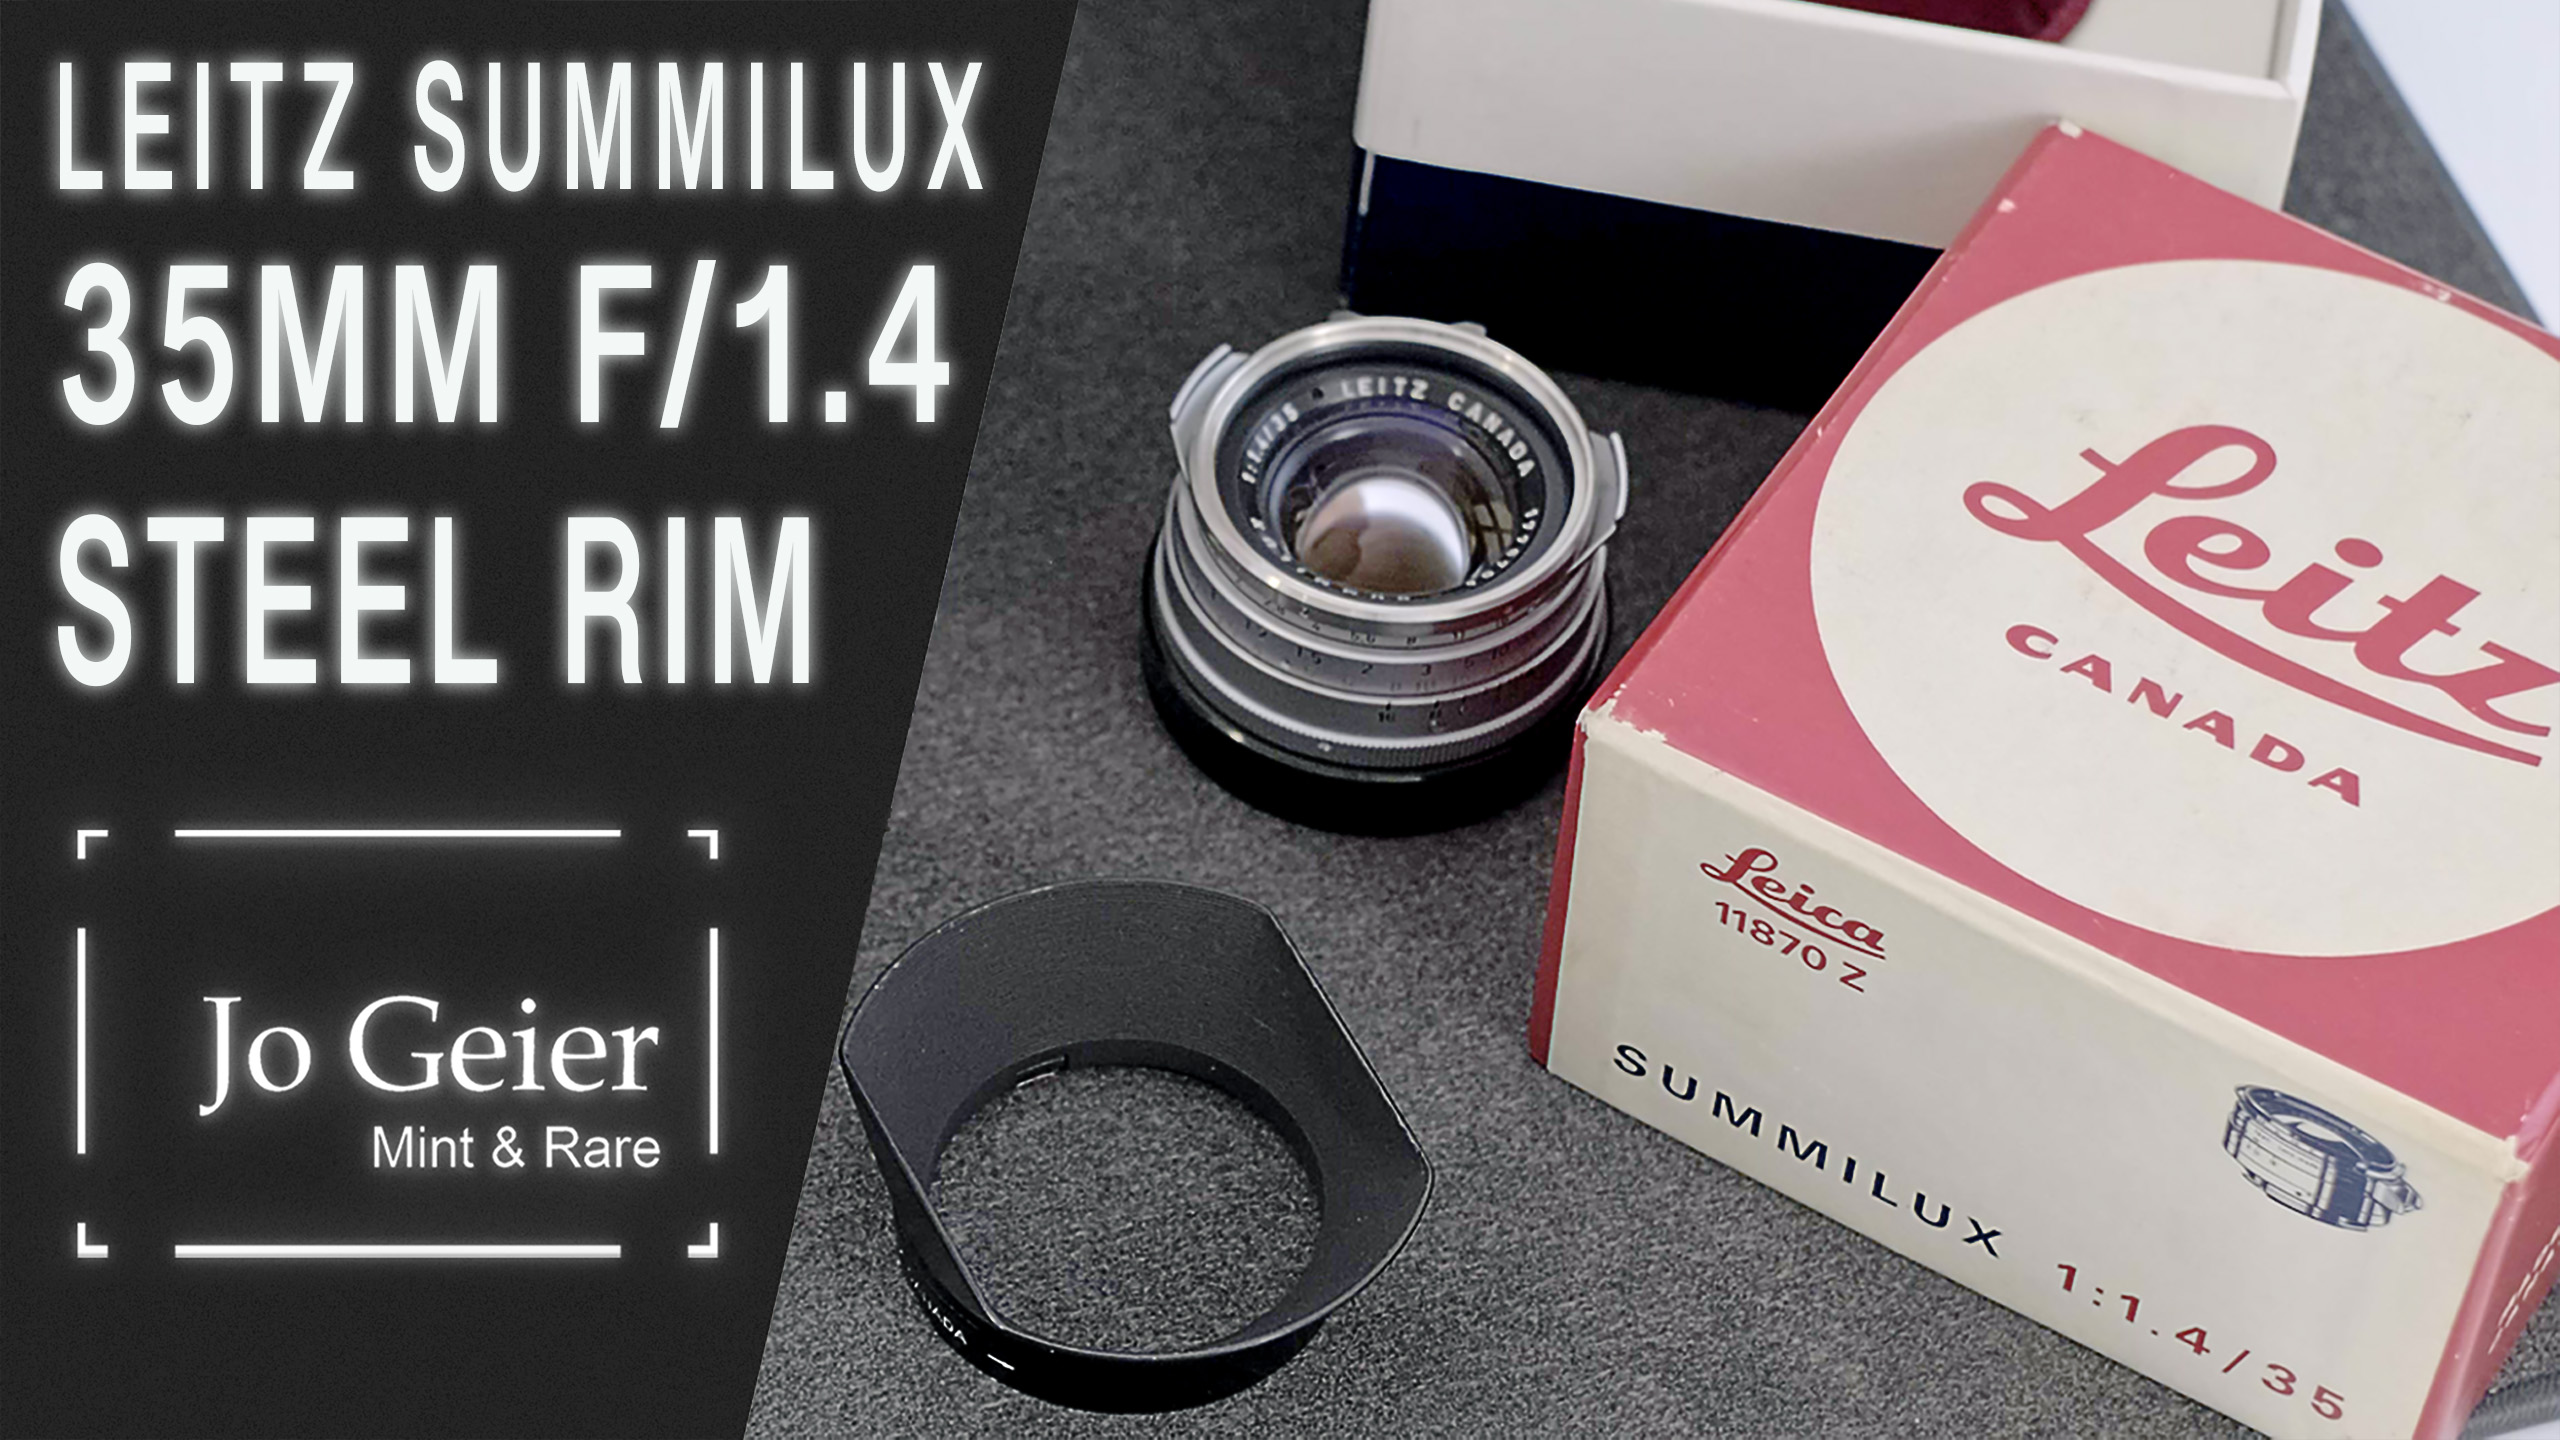 Leitz Summilux 35mm f/1.4 Steel Rim - The Original Version for the Leica M2  - Video - Jo Geier - Mint & Rare